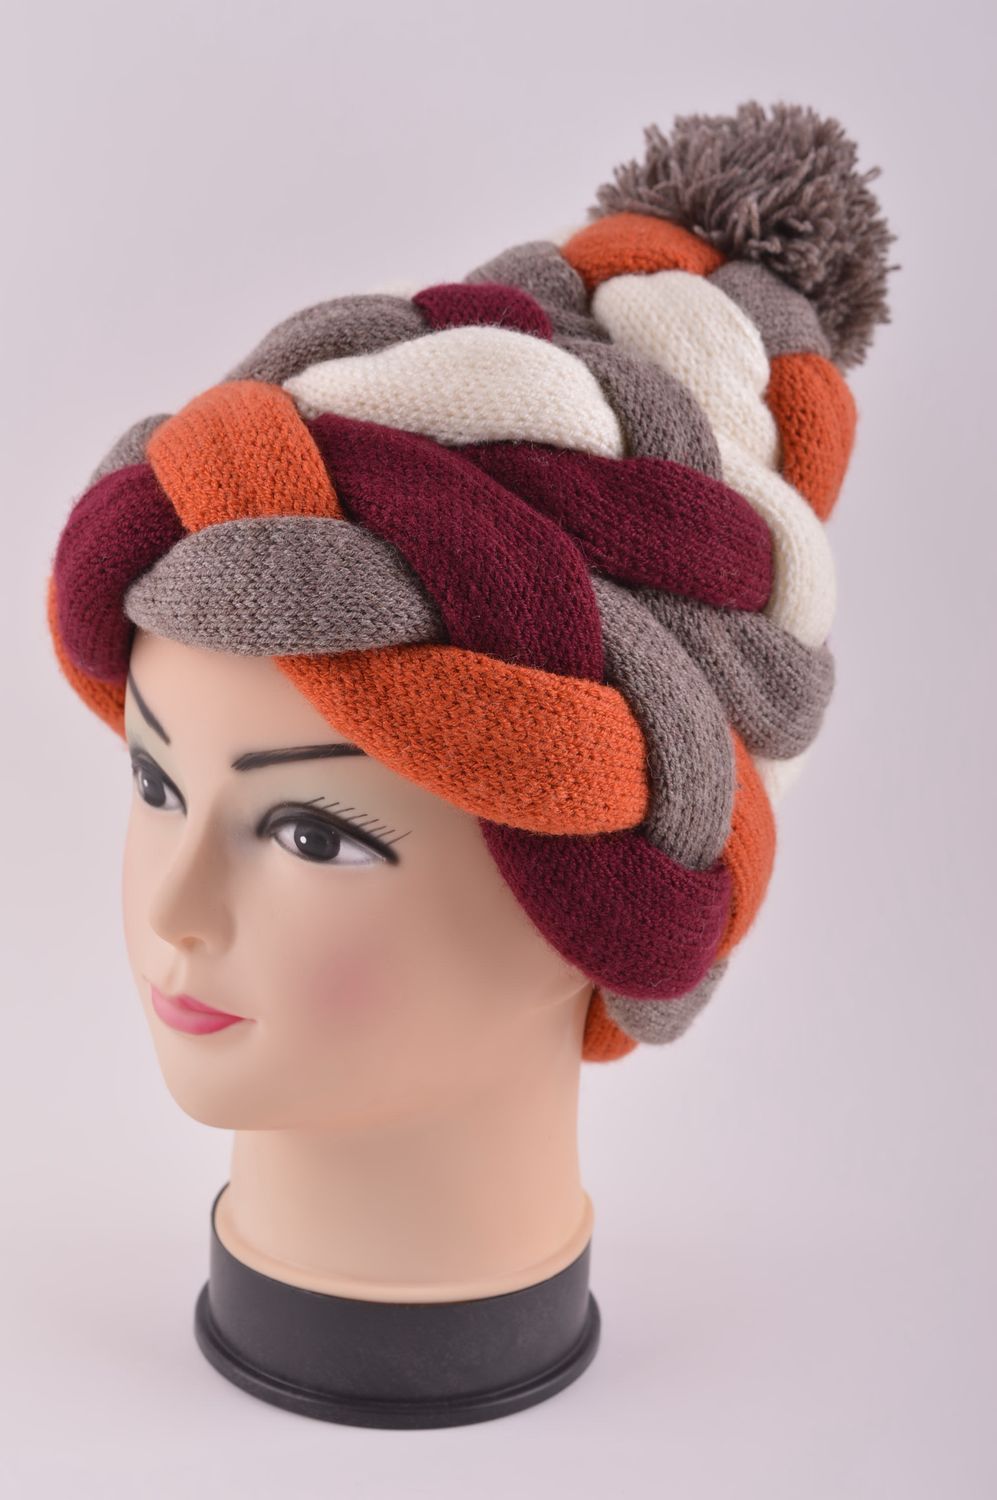 Fashion hat handmade warm hat winter accessories for women knitted warm hat photo 2